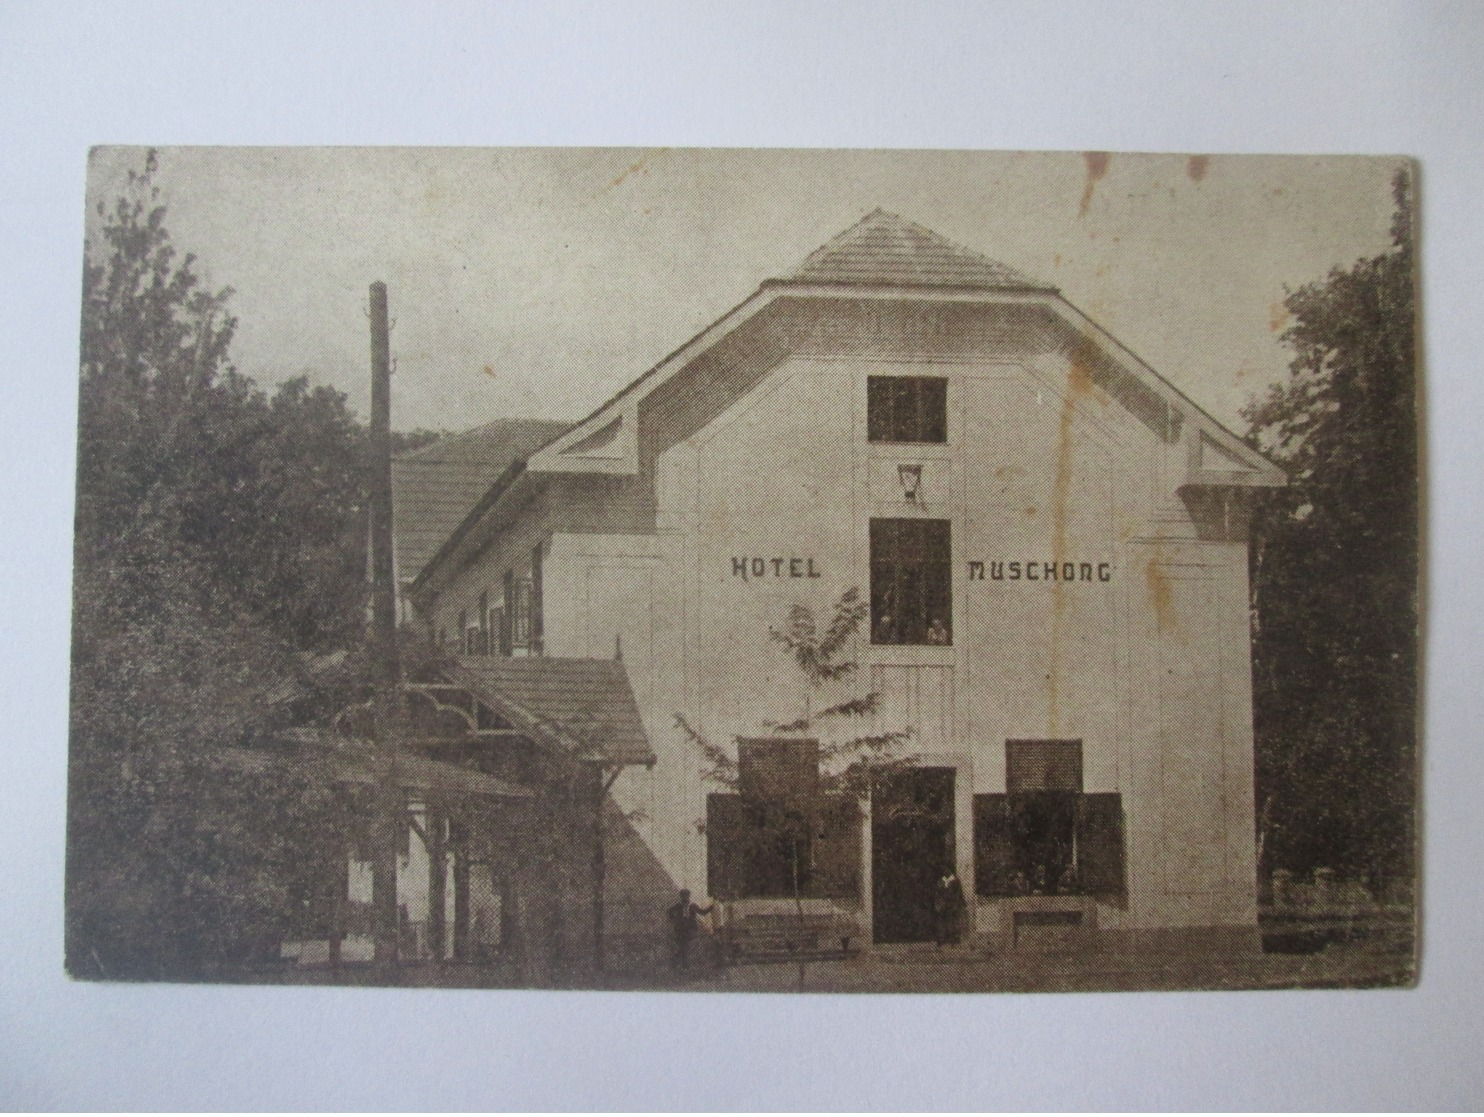 Romania/Buziaș(Timiș)-Hotel Muschong,unused Post Card From The 20s - Romania